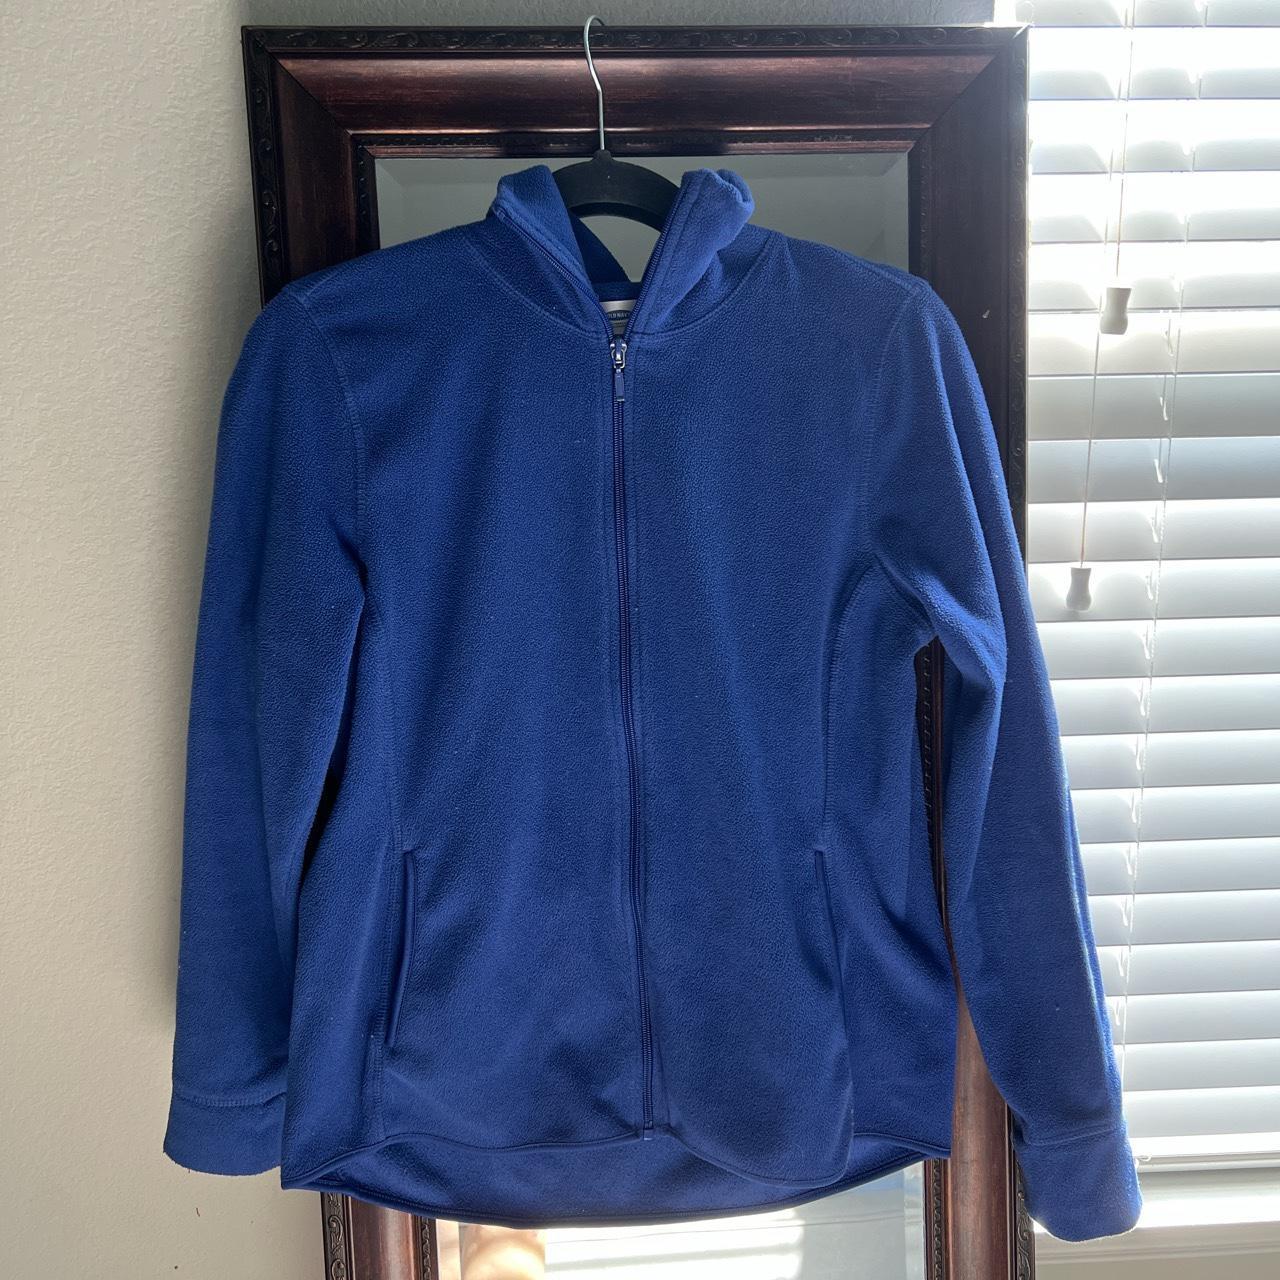 Blue full-zip thick fleece jacket from Old Navy in... - Depop